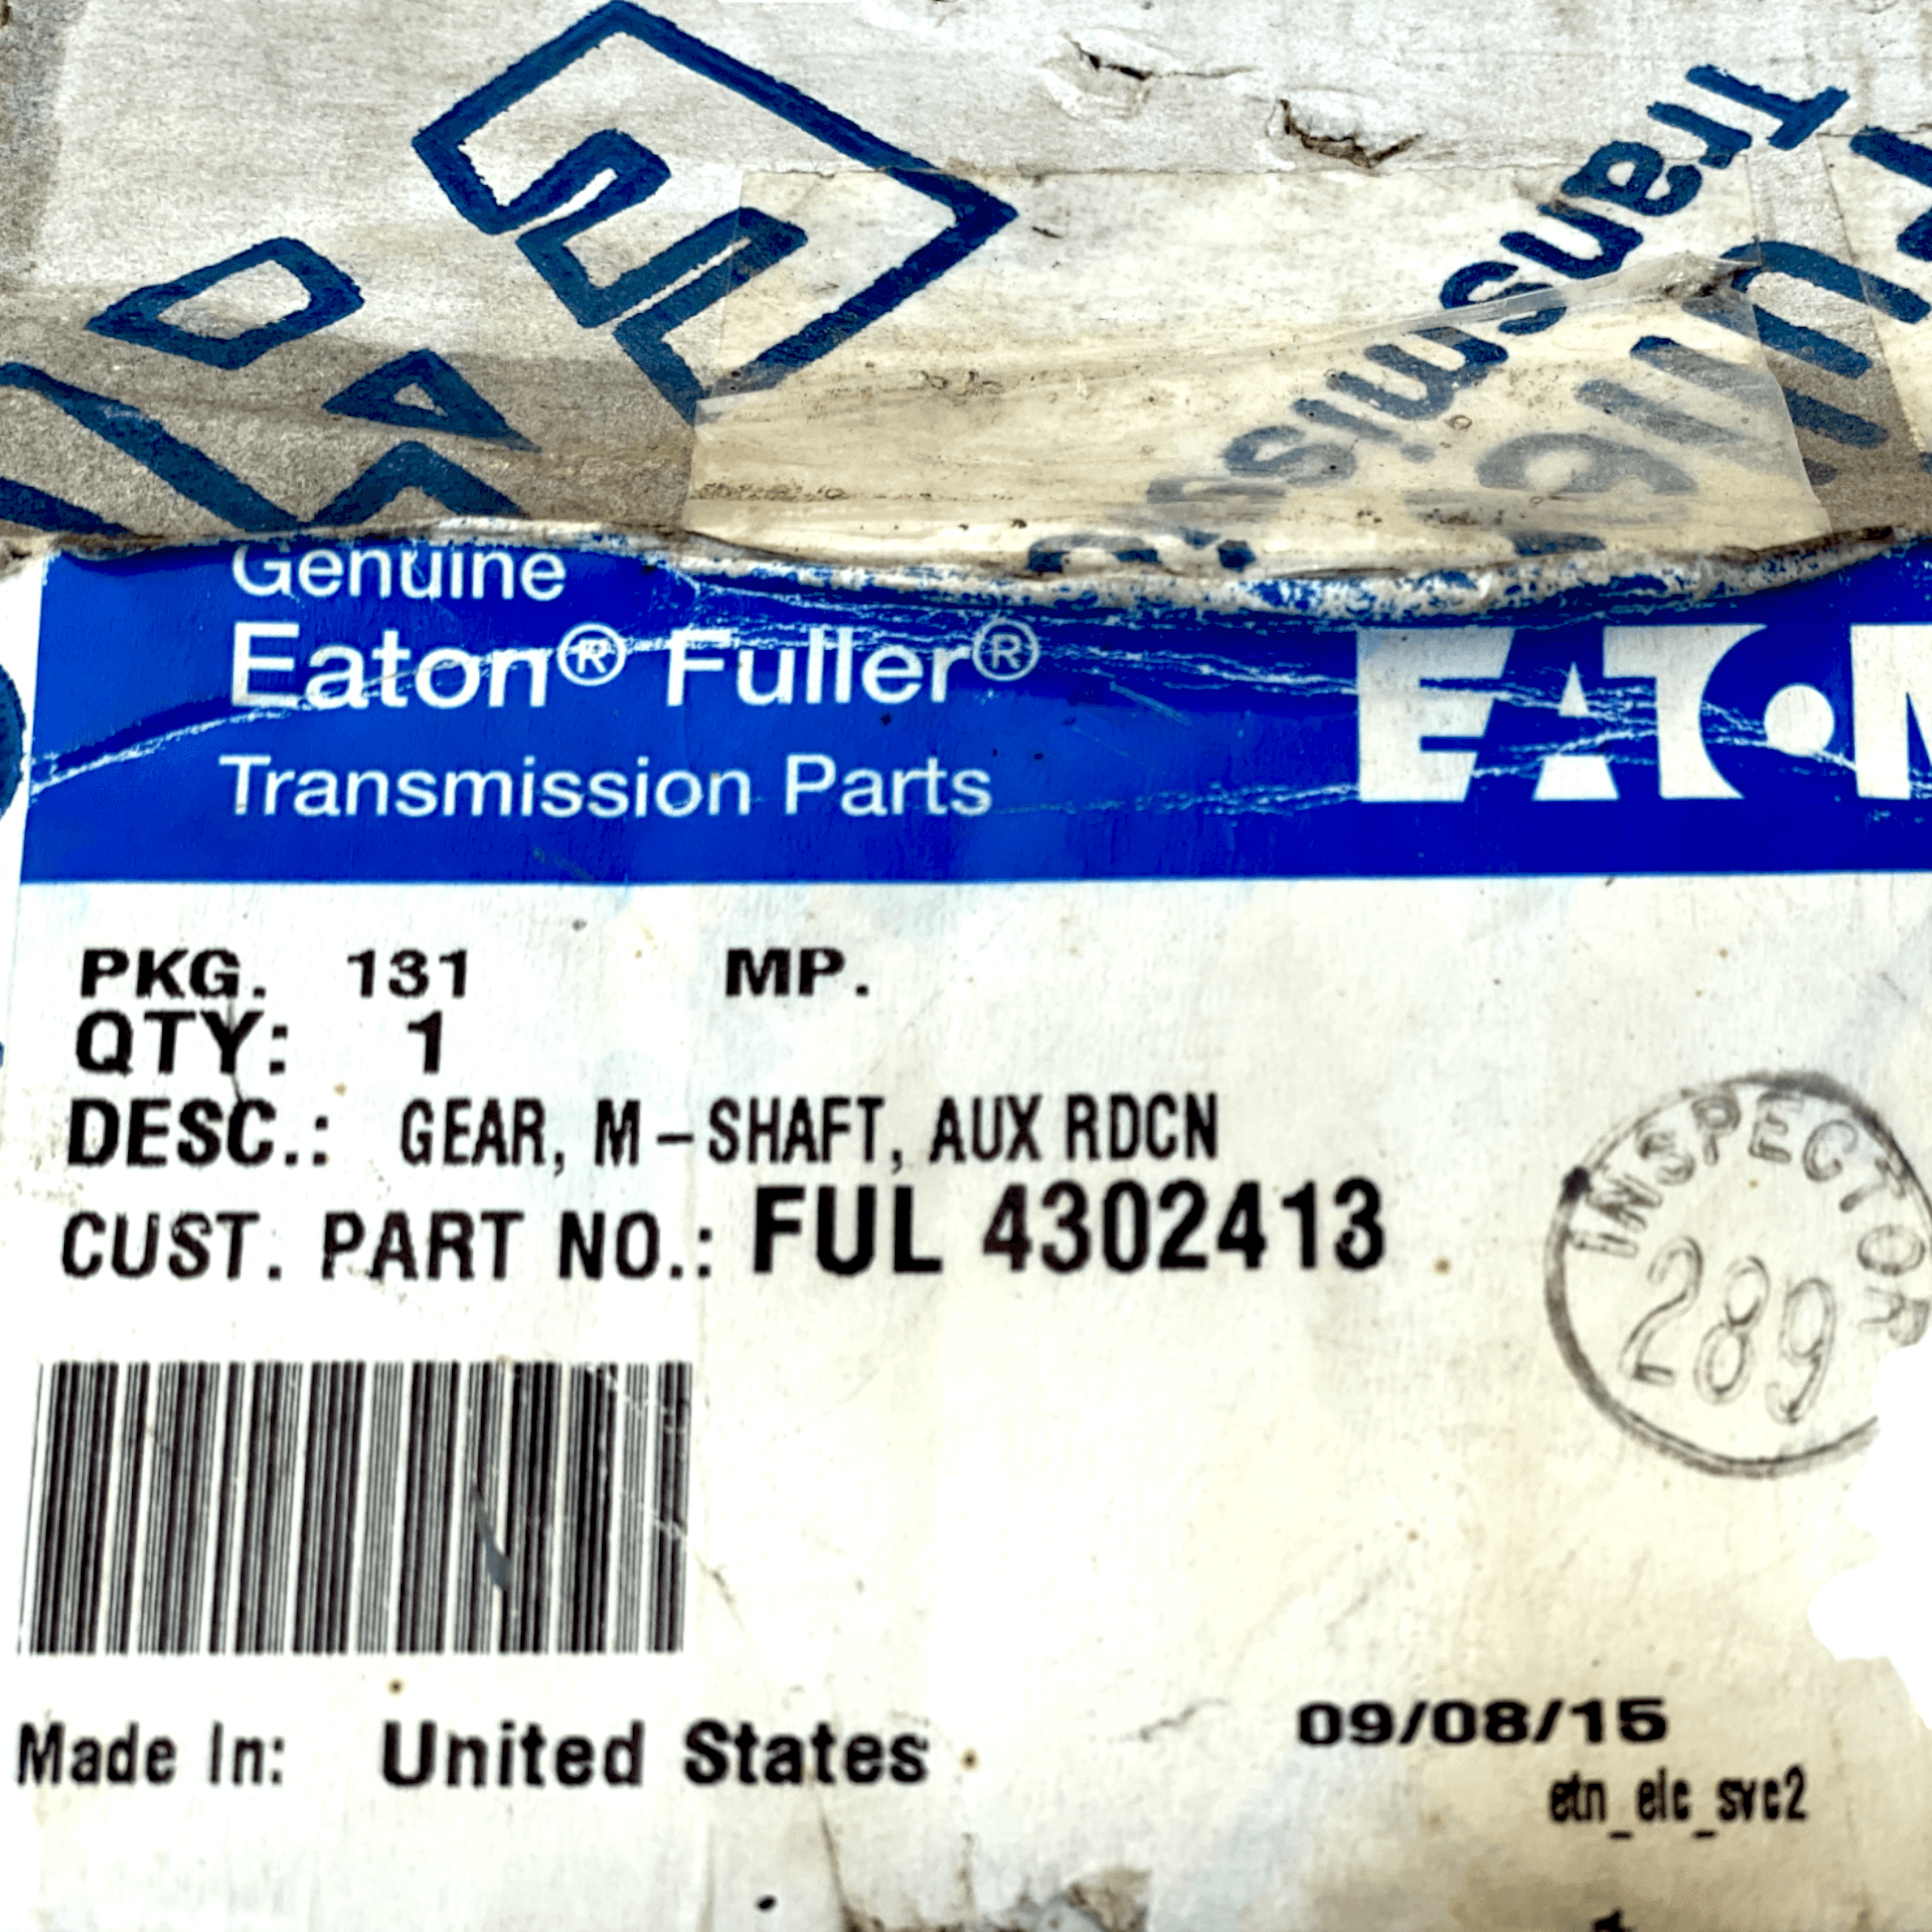 4302413 Ful4302413 Ful 4302413 Genuine Eaton Fuller Mainshaft Gear - ADVANCED TRUCK PARTS